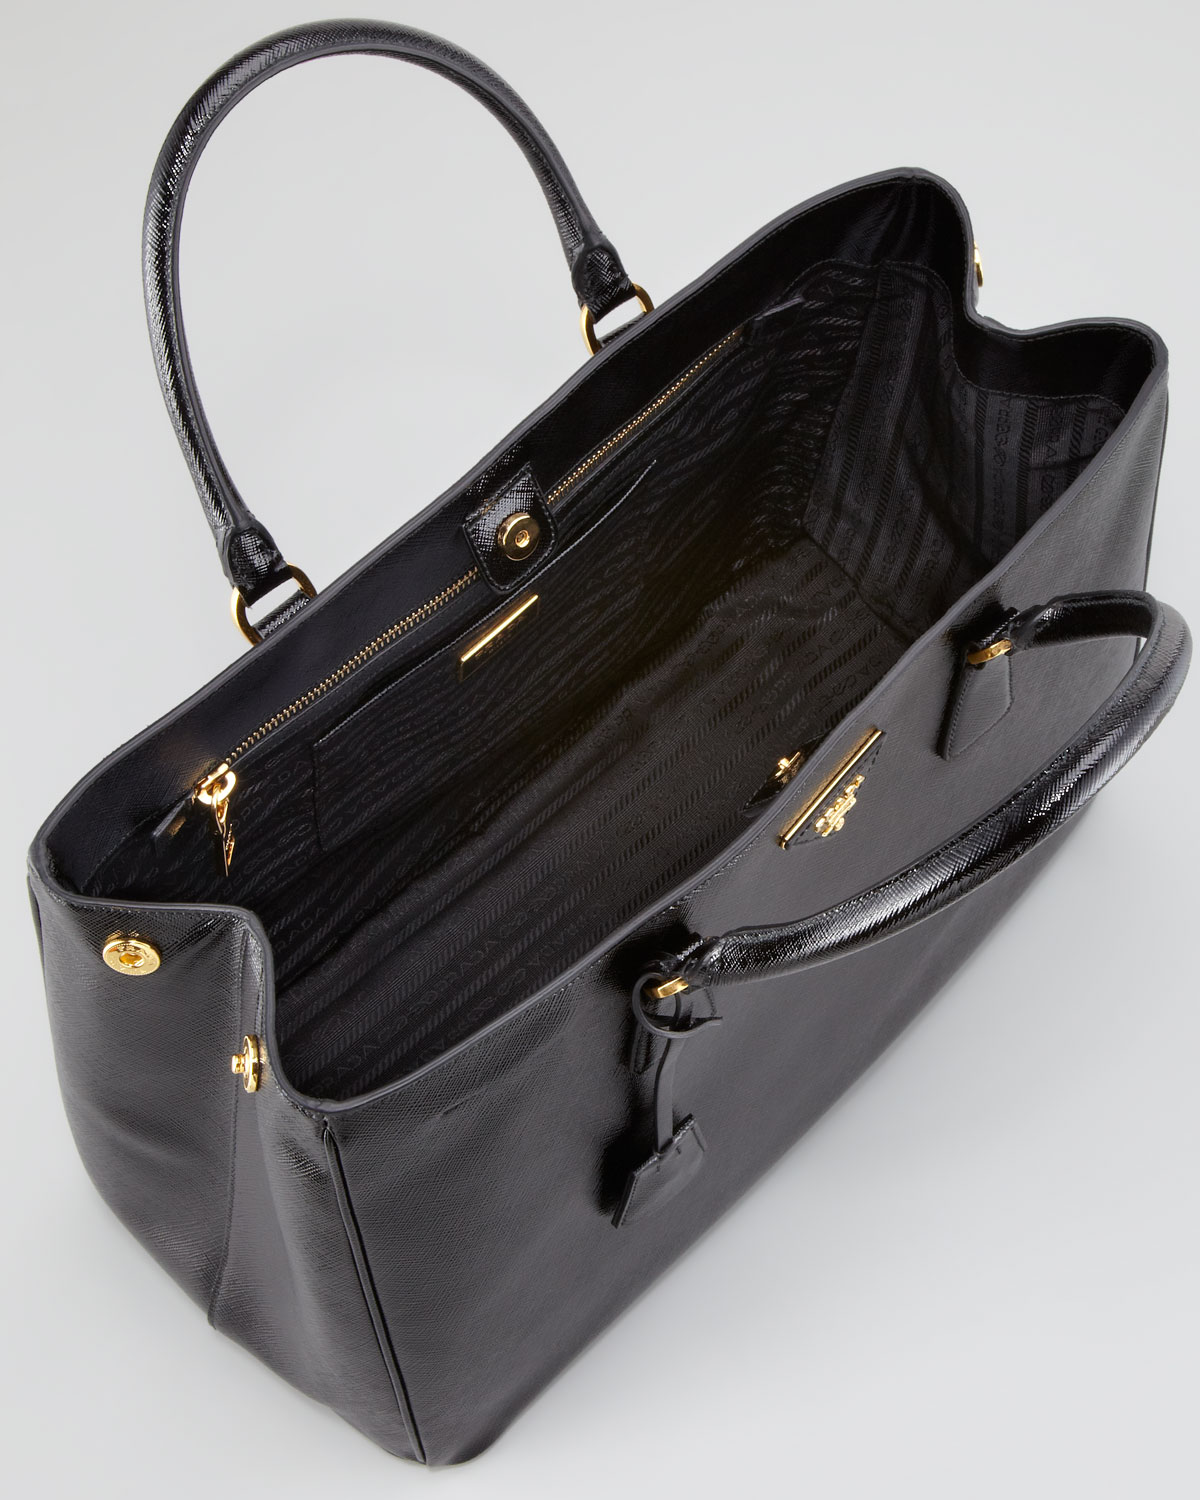 prada wholesalers - Prada Saffiano Vernice Gardeners Tote Bag Nero in Black (nero) | Lyst